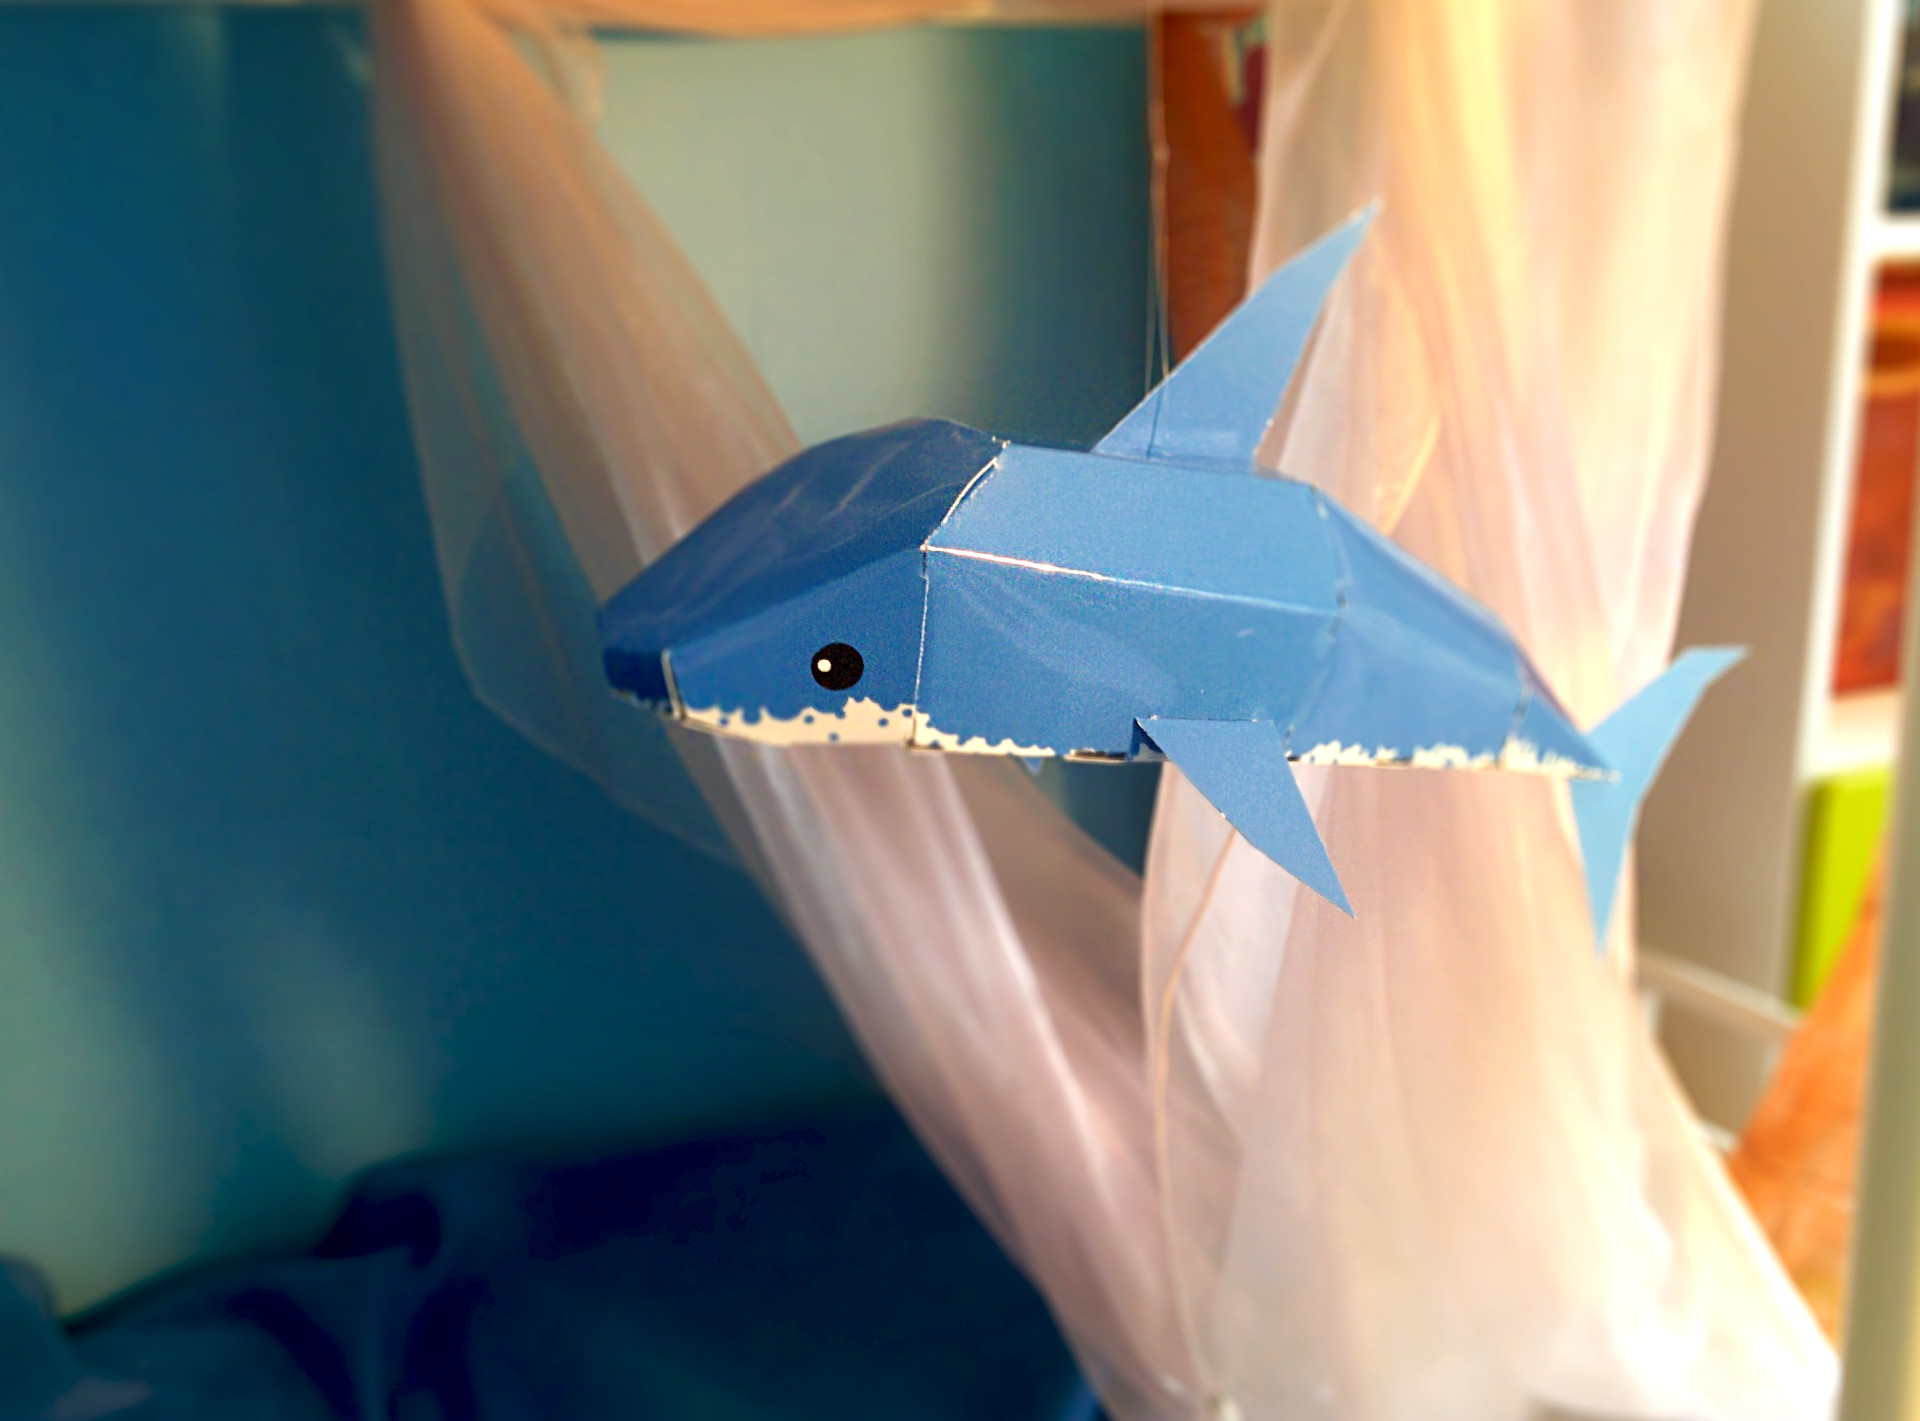 Montage prototype "Shark"